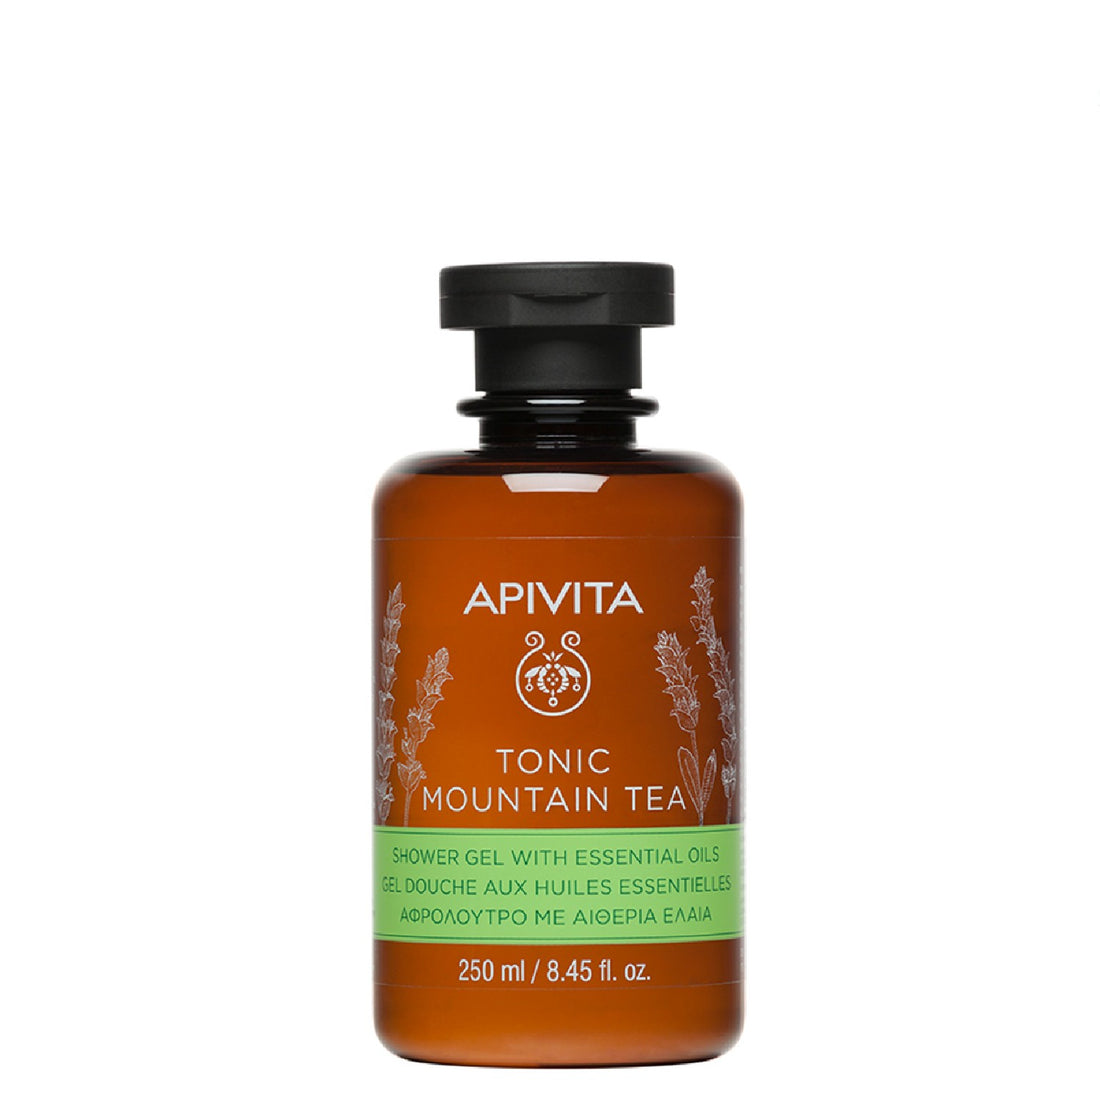 Apivita Tonic Mountain Tea Shower Gel with Essential Oils 250 ml